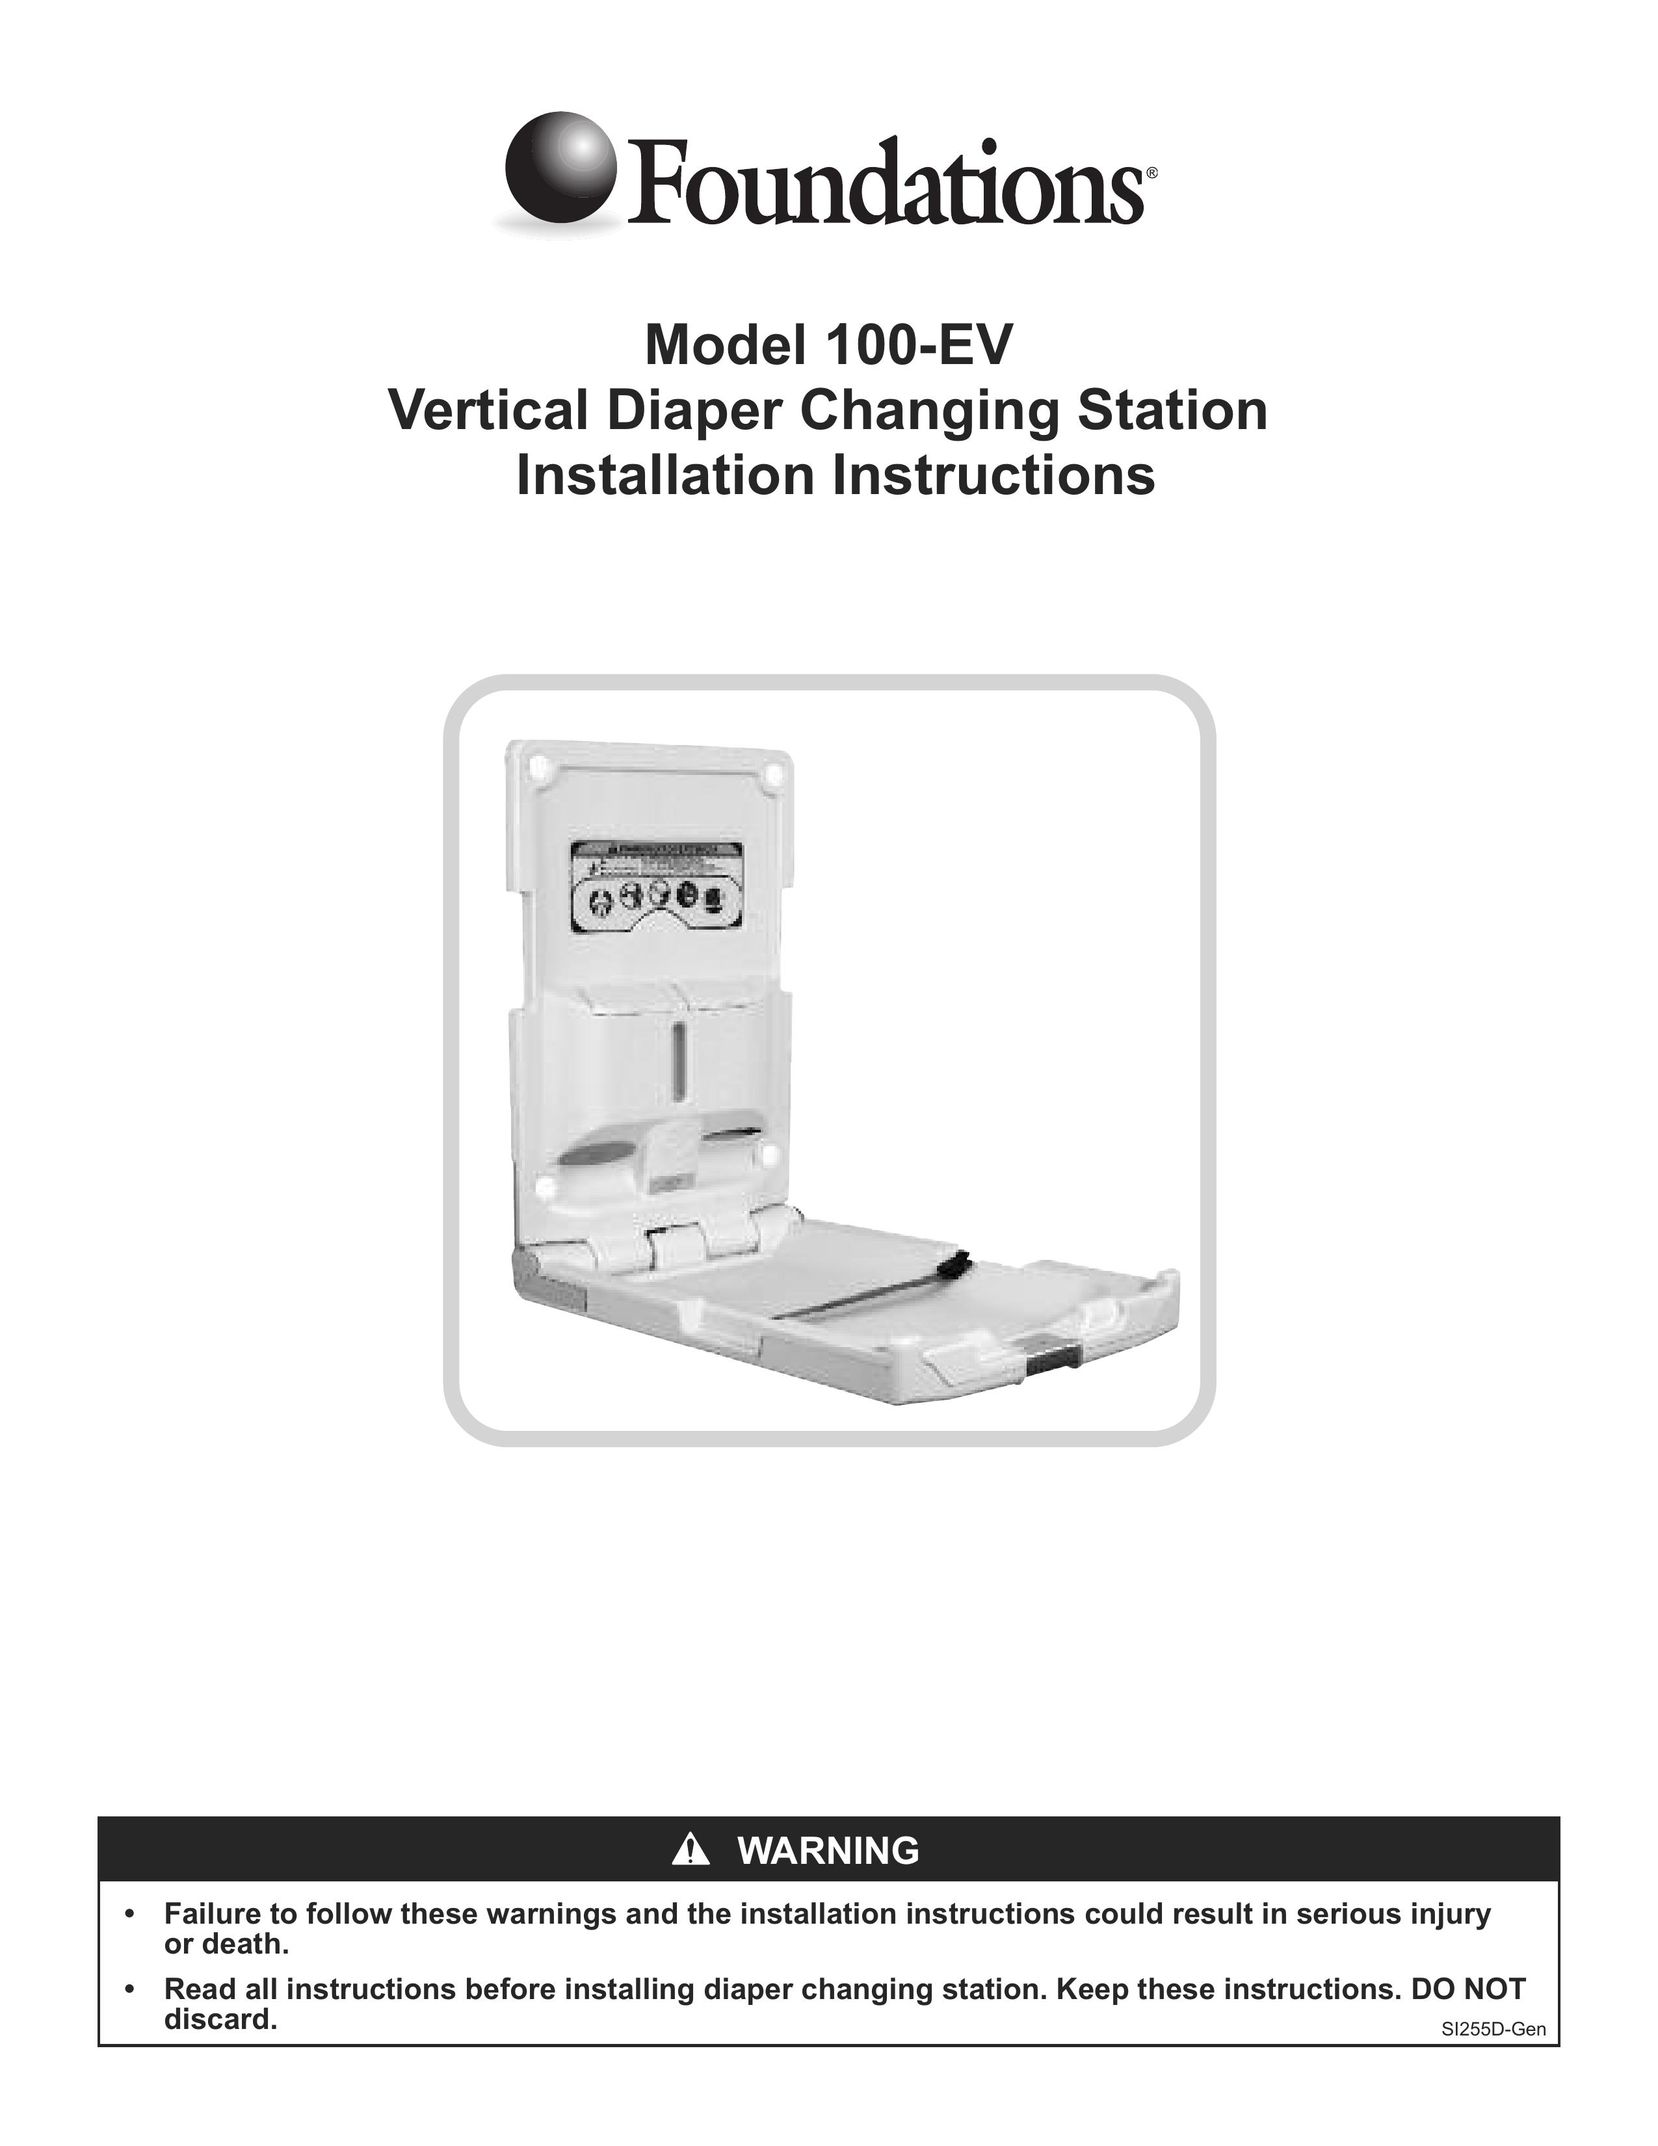 Foundations 100-EV Baby Furniture User Manual